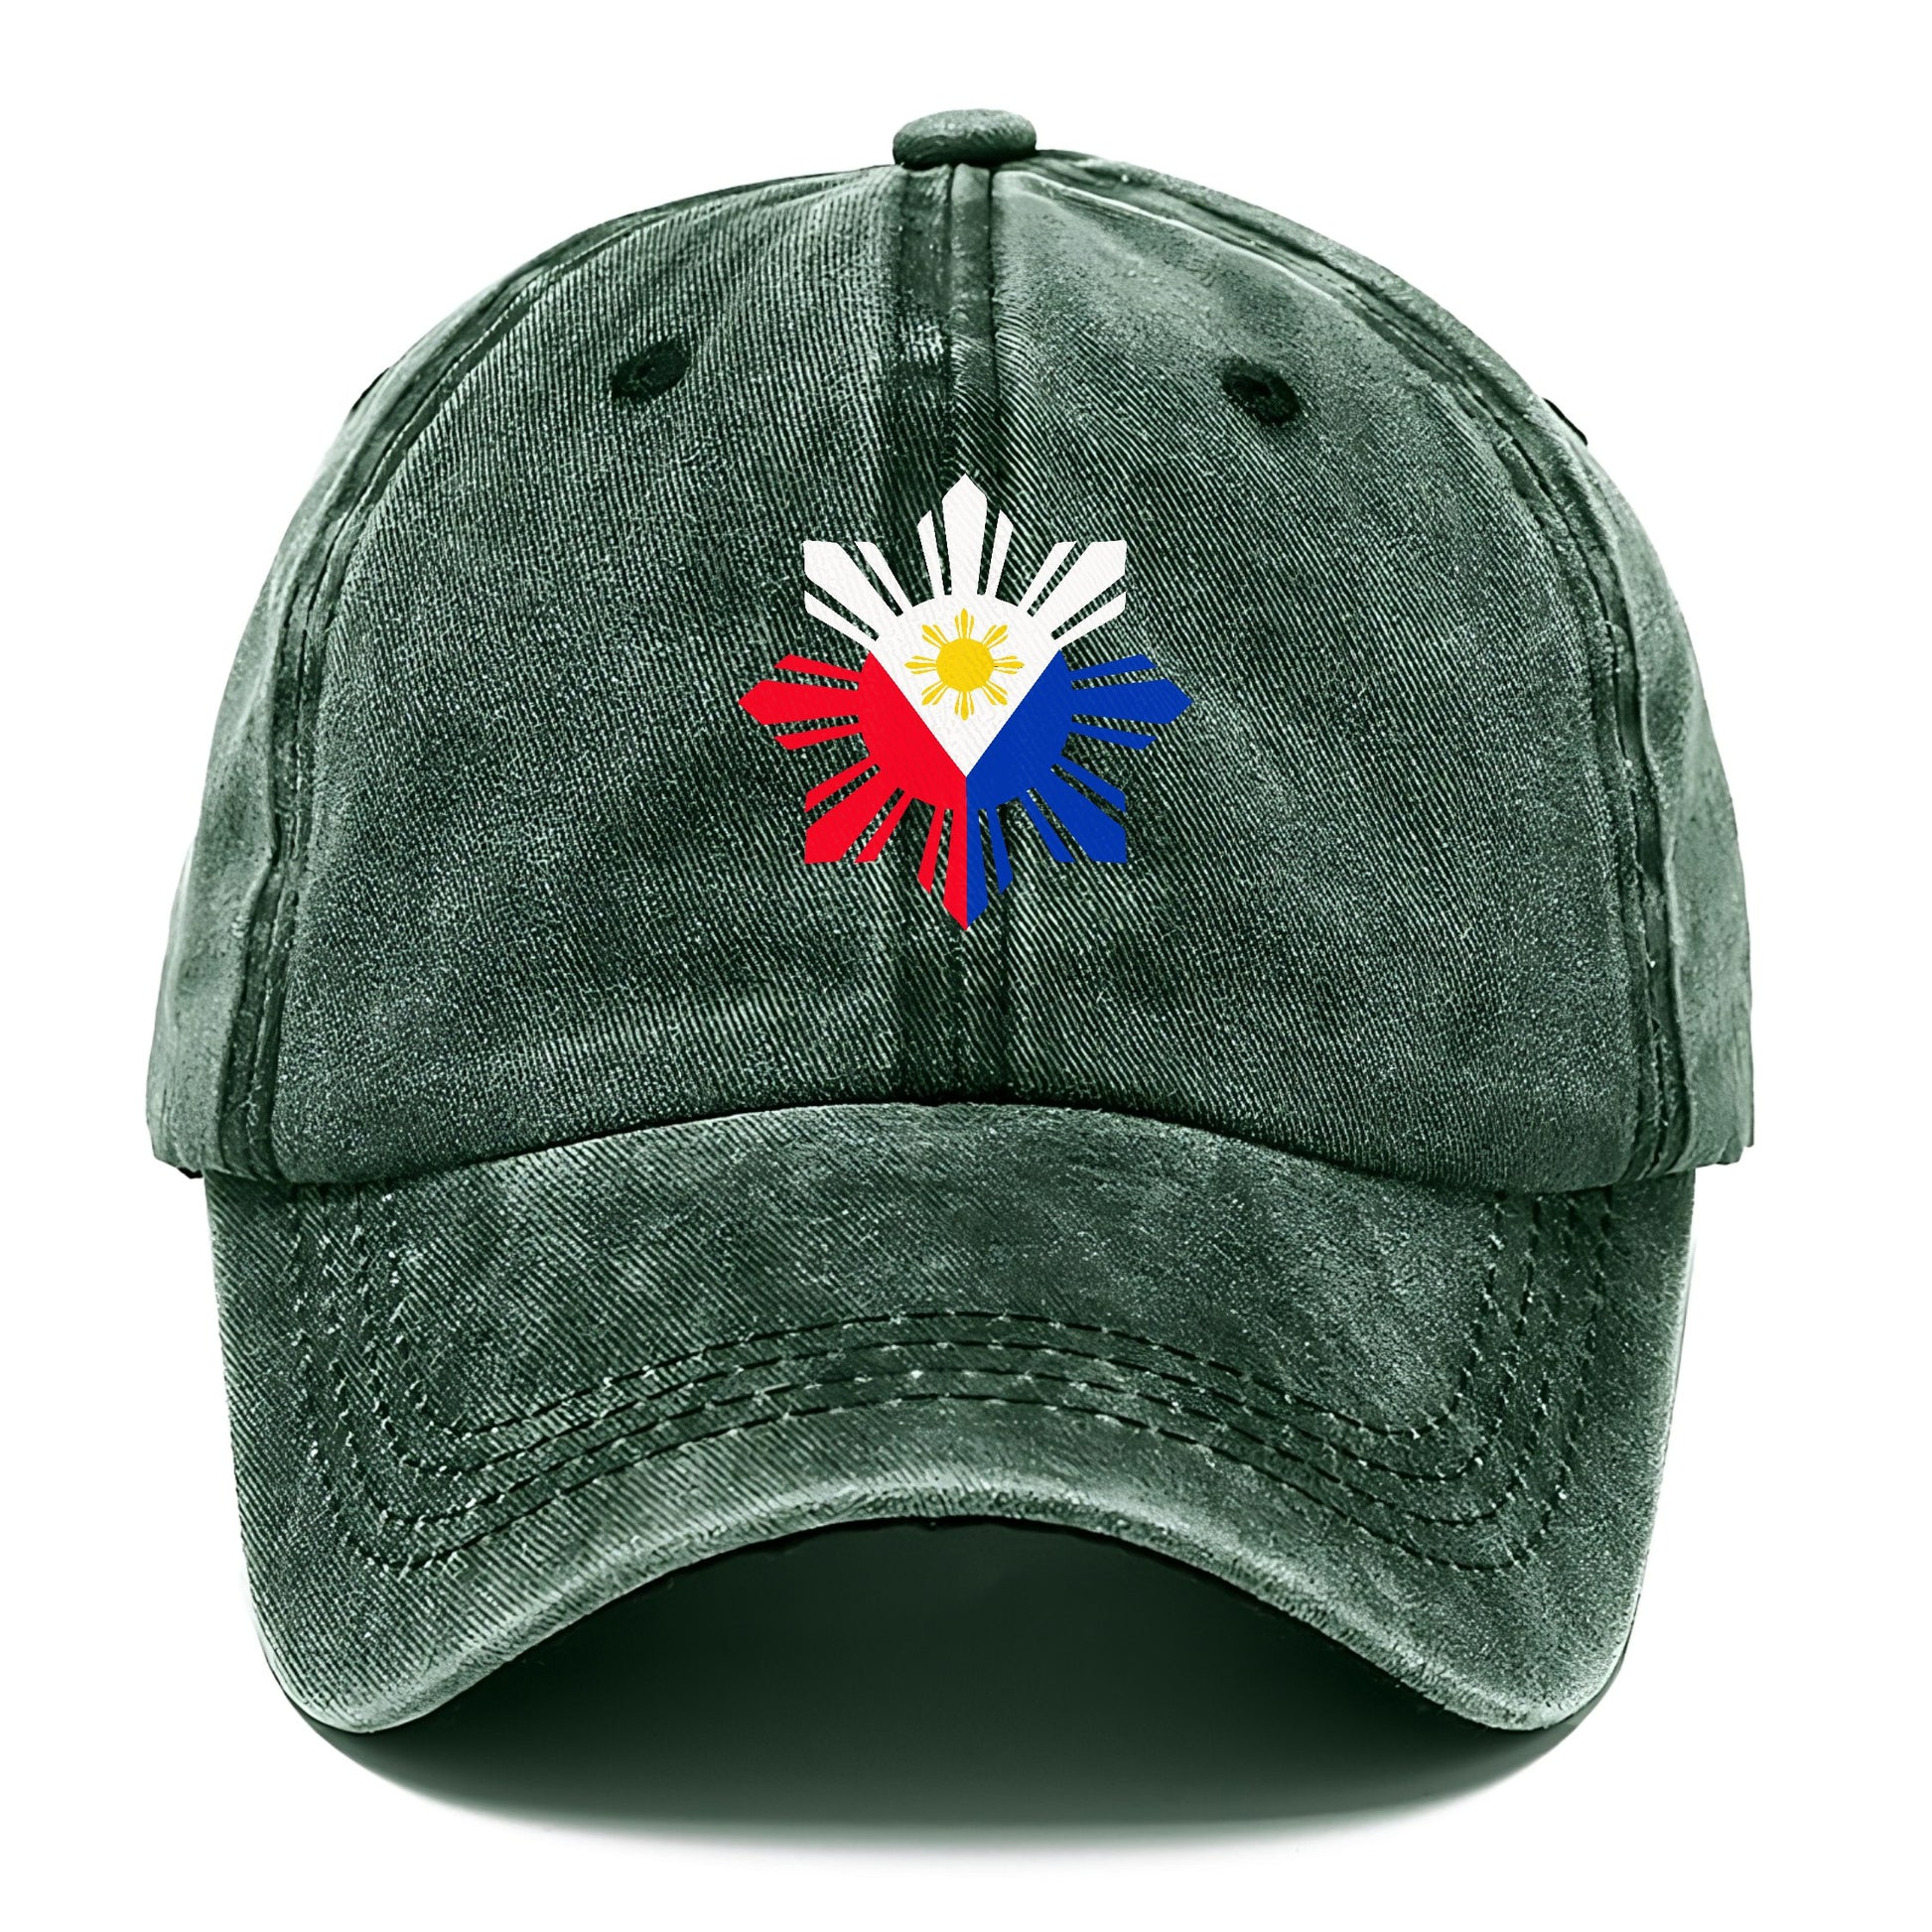 Philippines Iconic Sun and Stars Hat